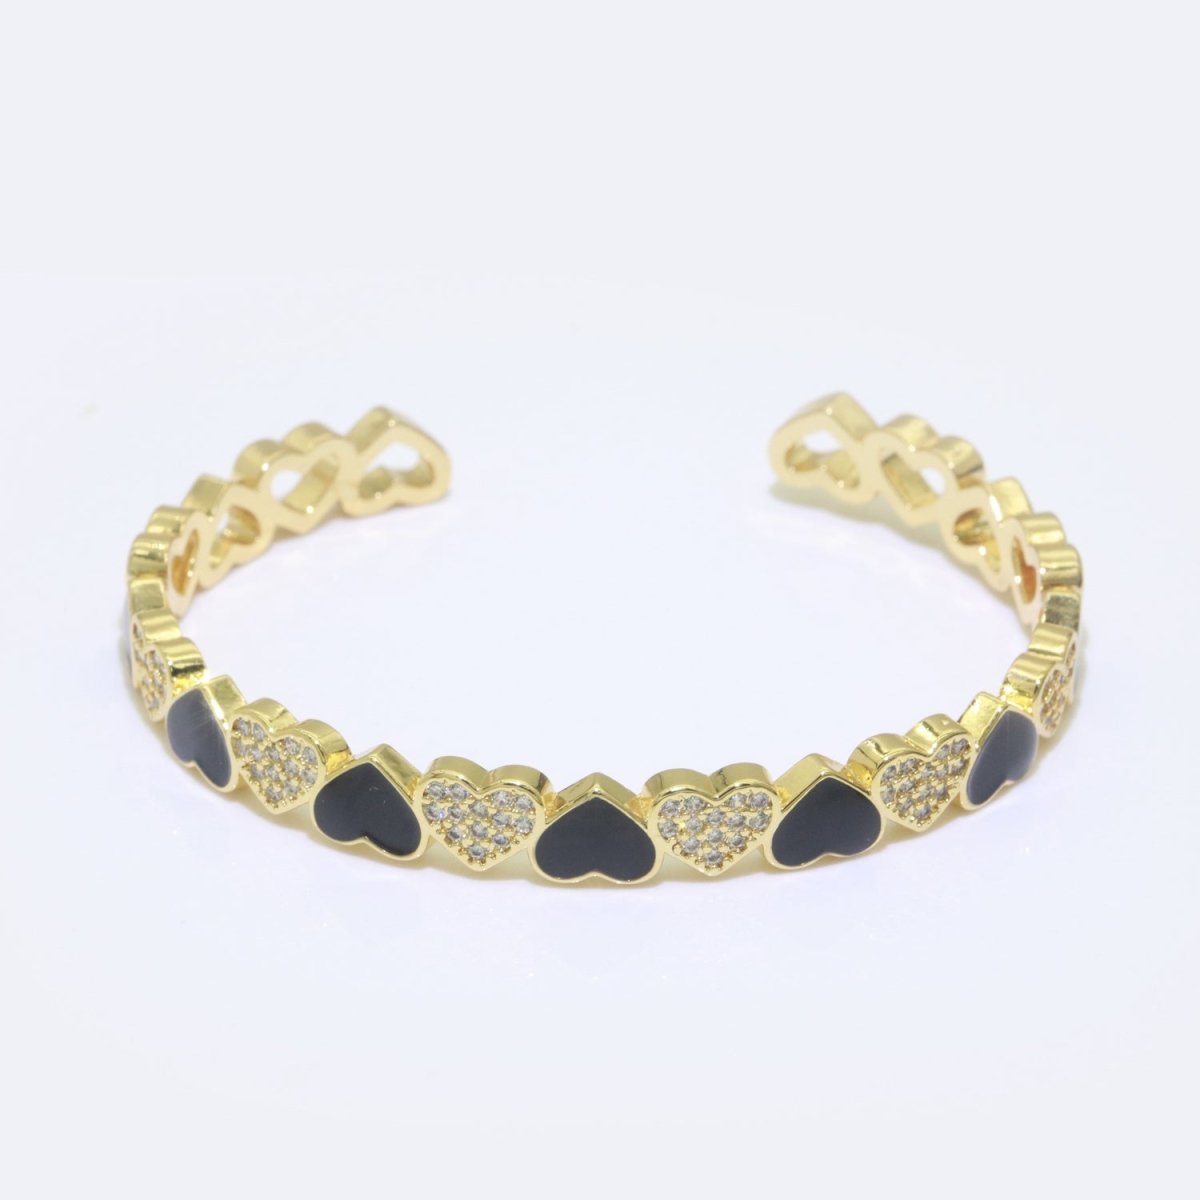 Black Heart Enamel 14k Gold Filled Adjustable Bangle, Gold Cuff Bangle Bracelet Micro Pave Jewelry - DLUXCA